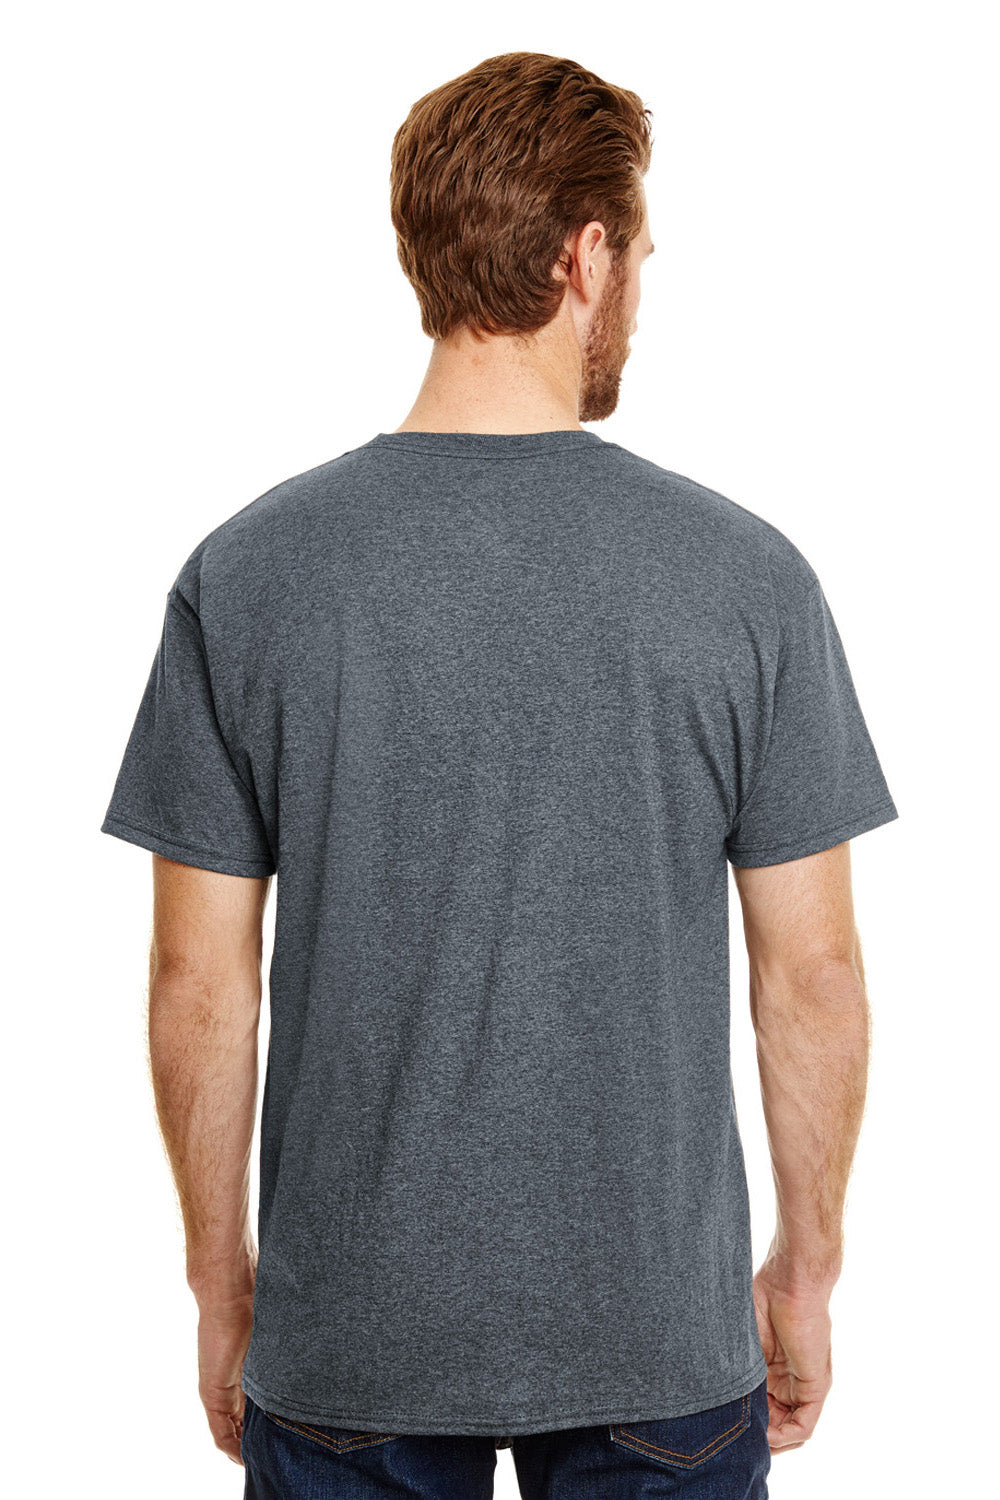 Hanes 42TB Mens X-Temp FreshIQ Moisture Wicking Short Sleeve Crewneck T-Shirt Slate Grey Back